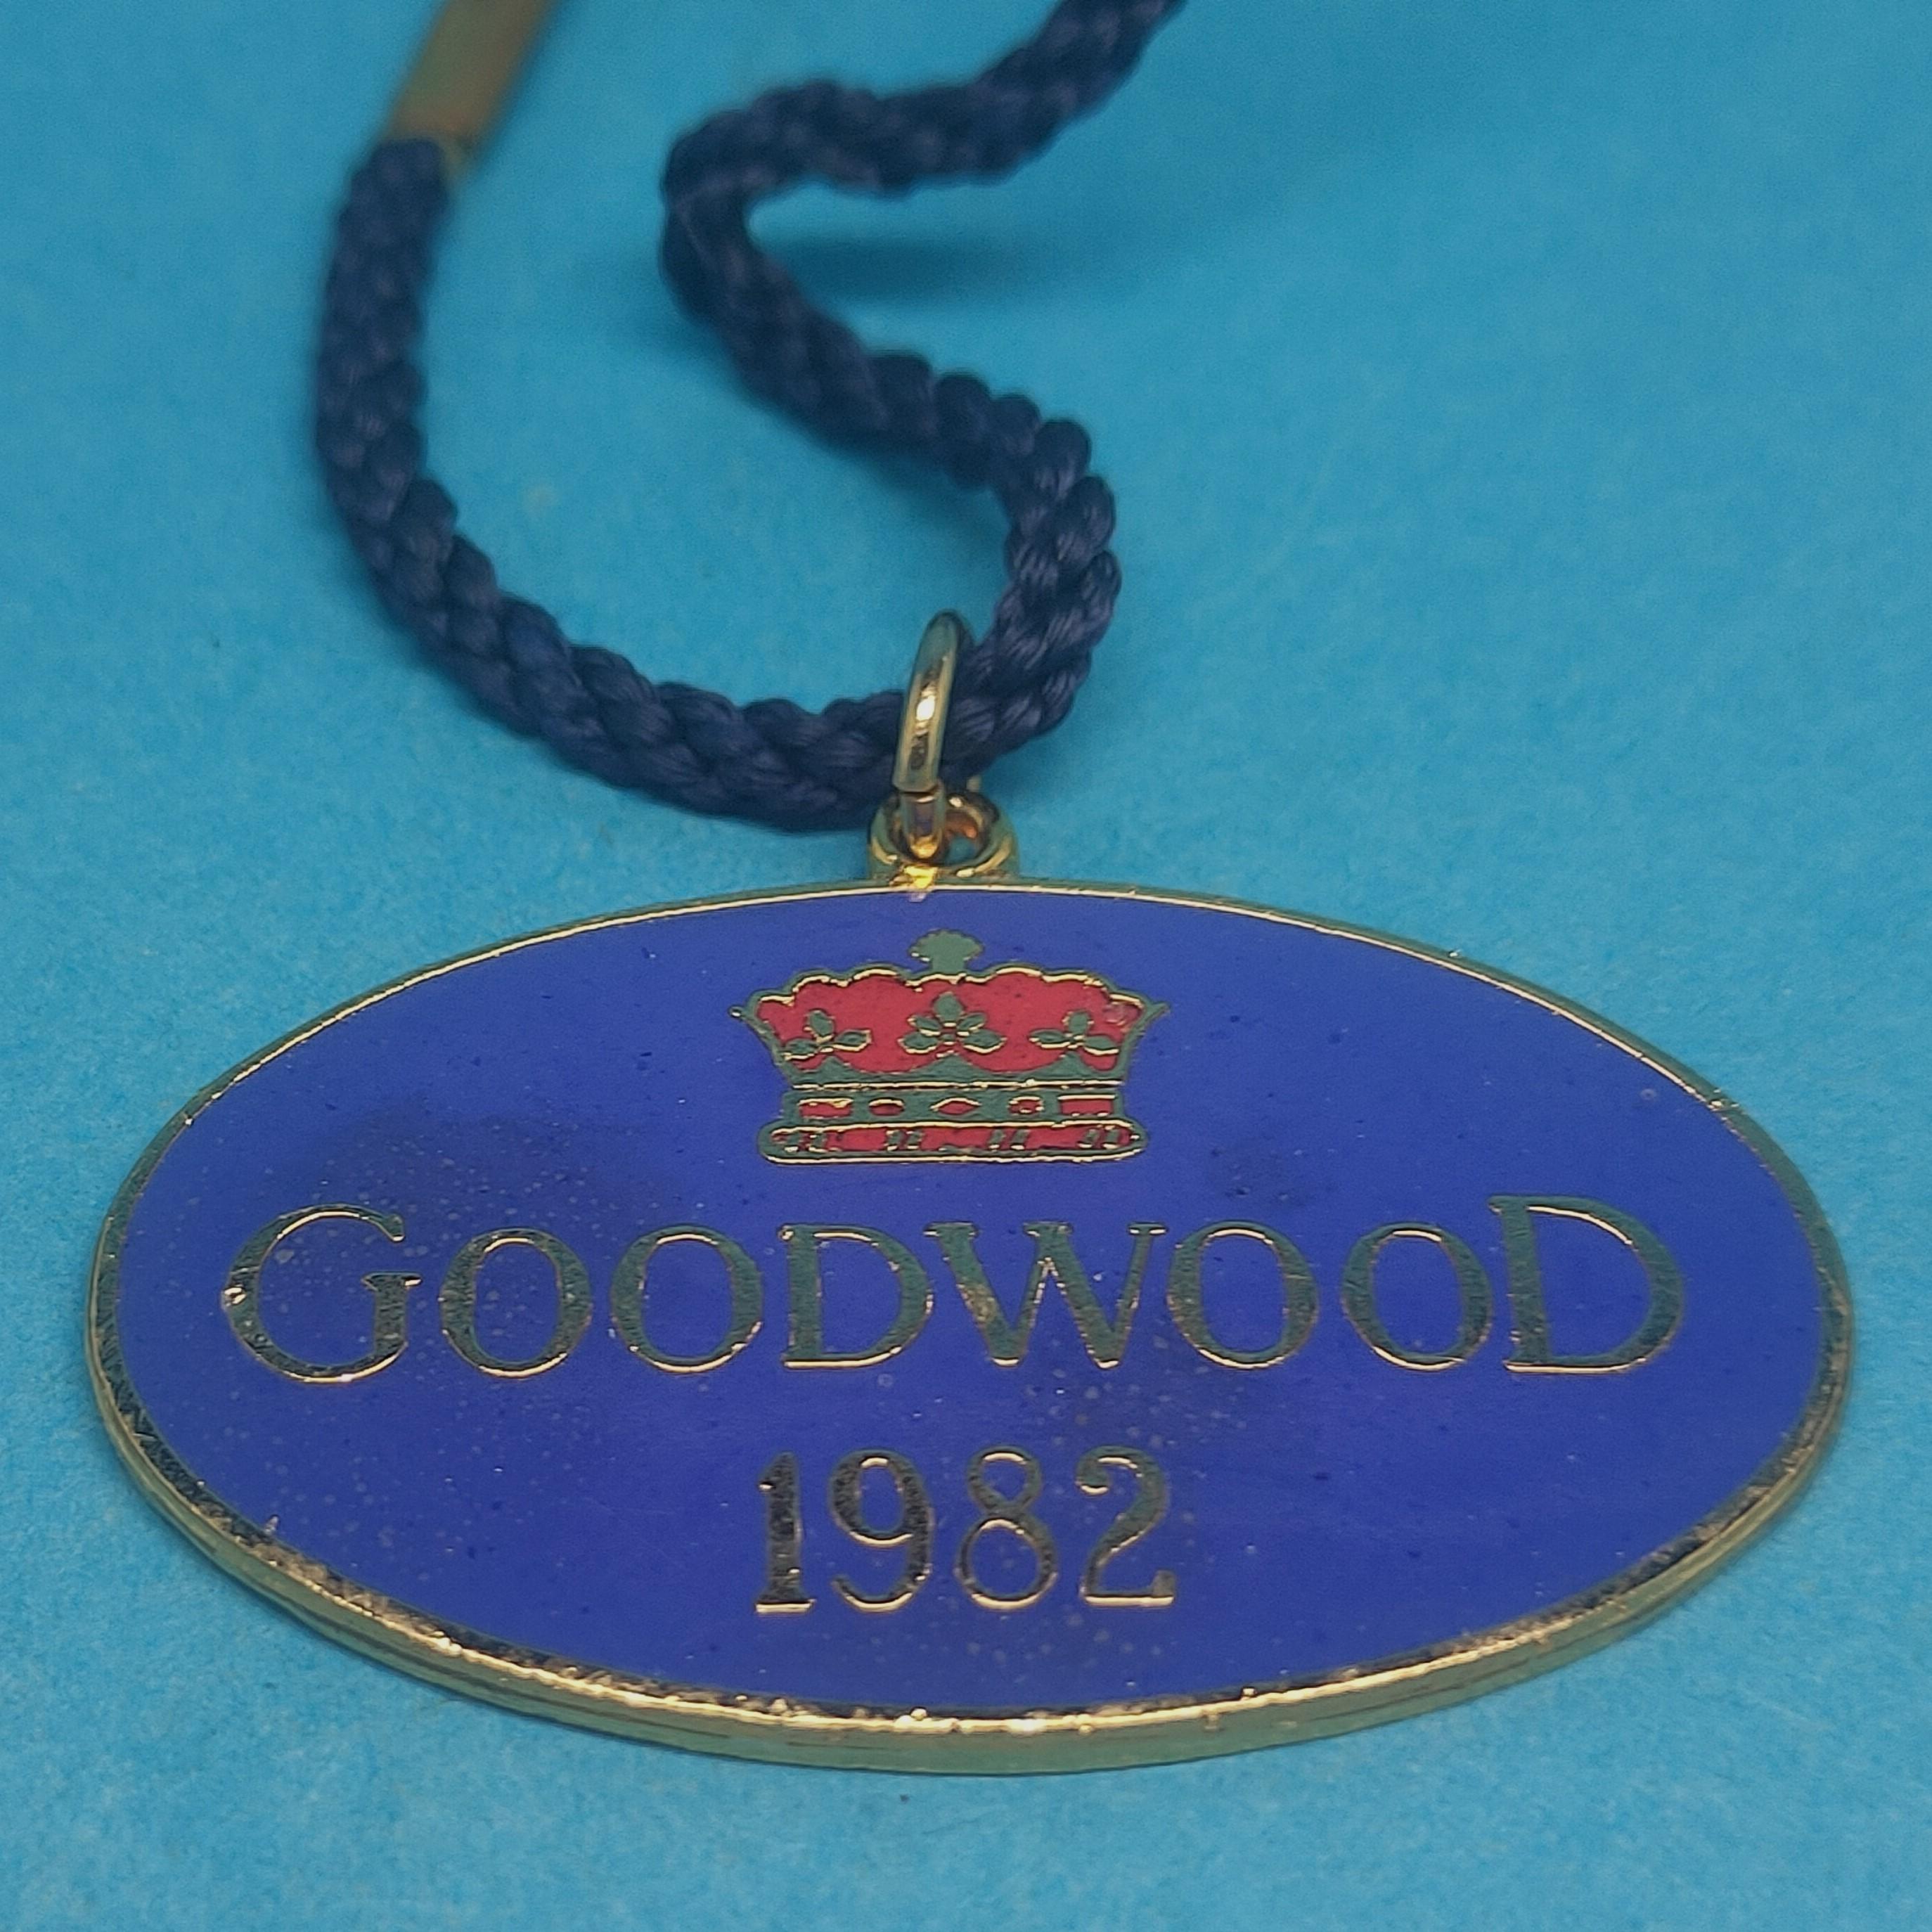 Goodwood 1982